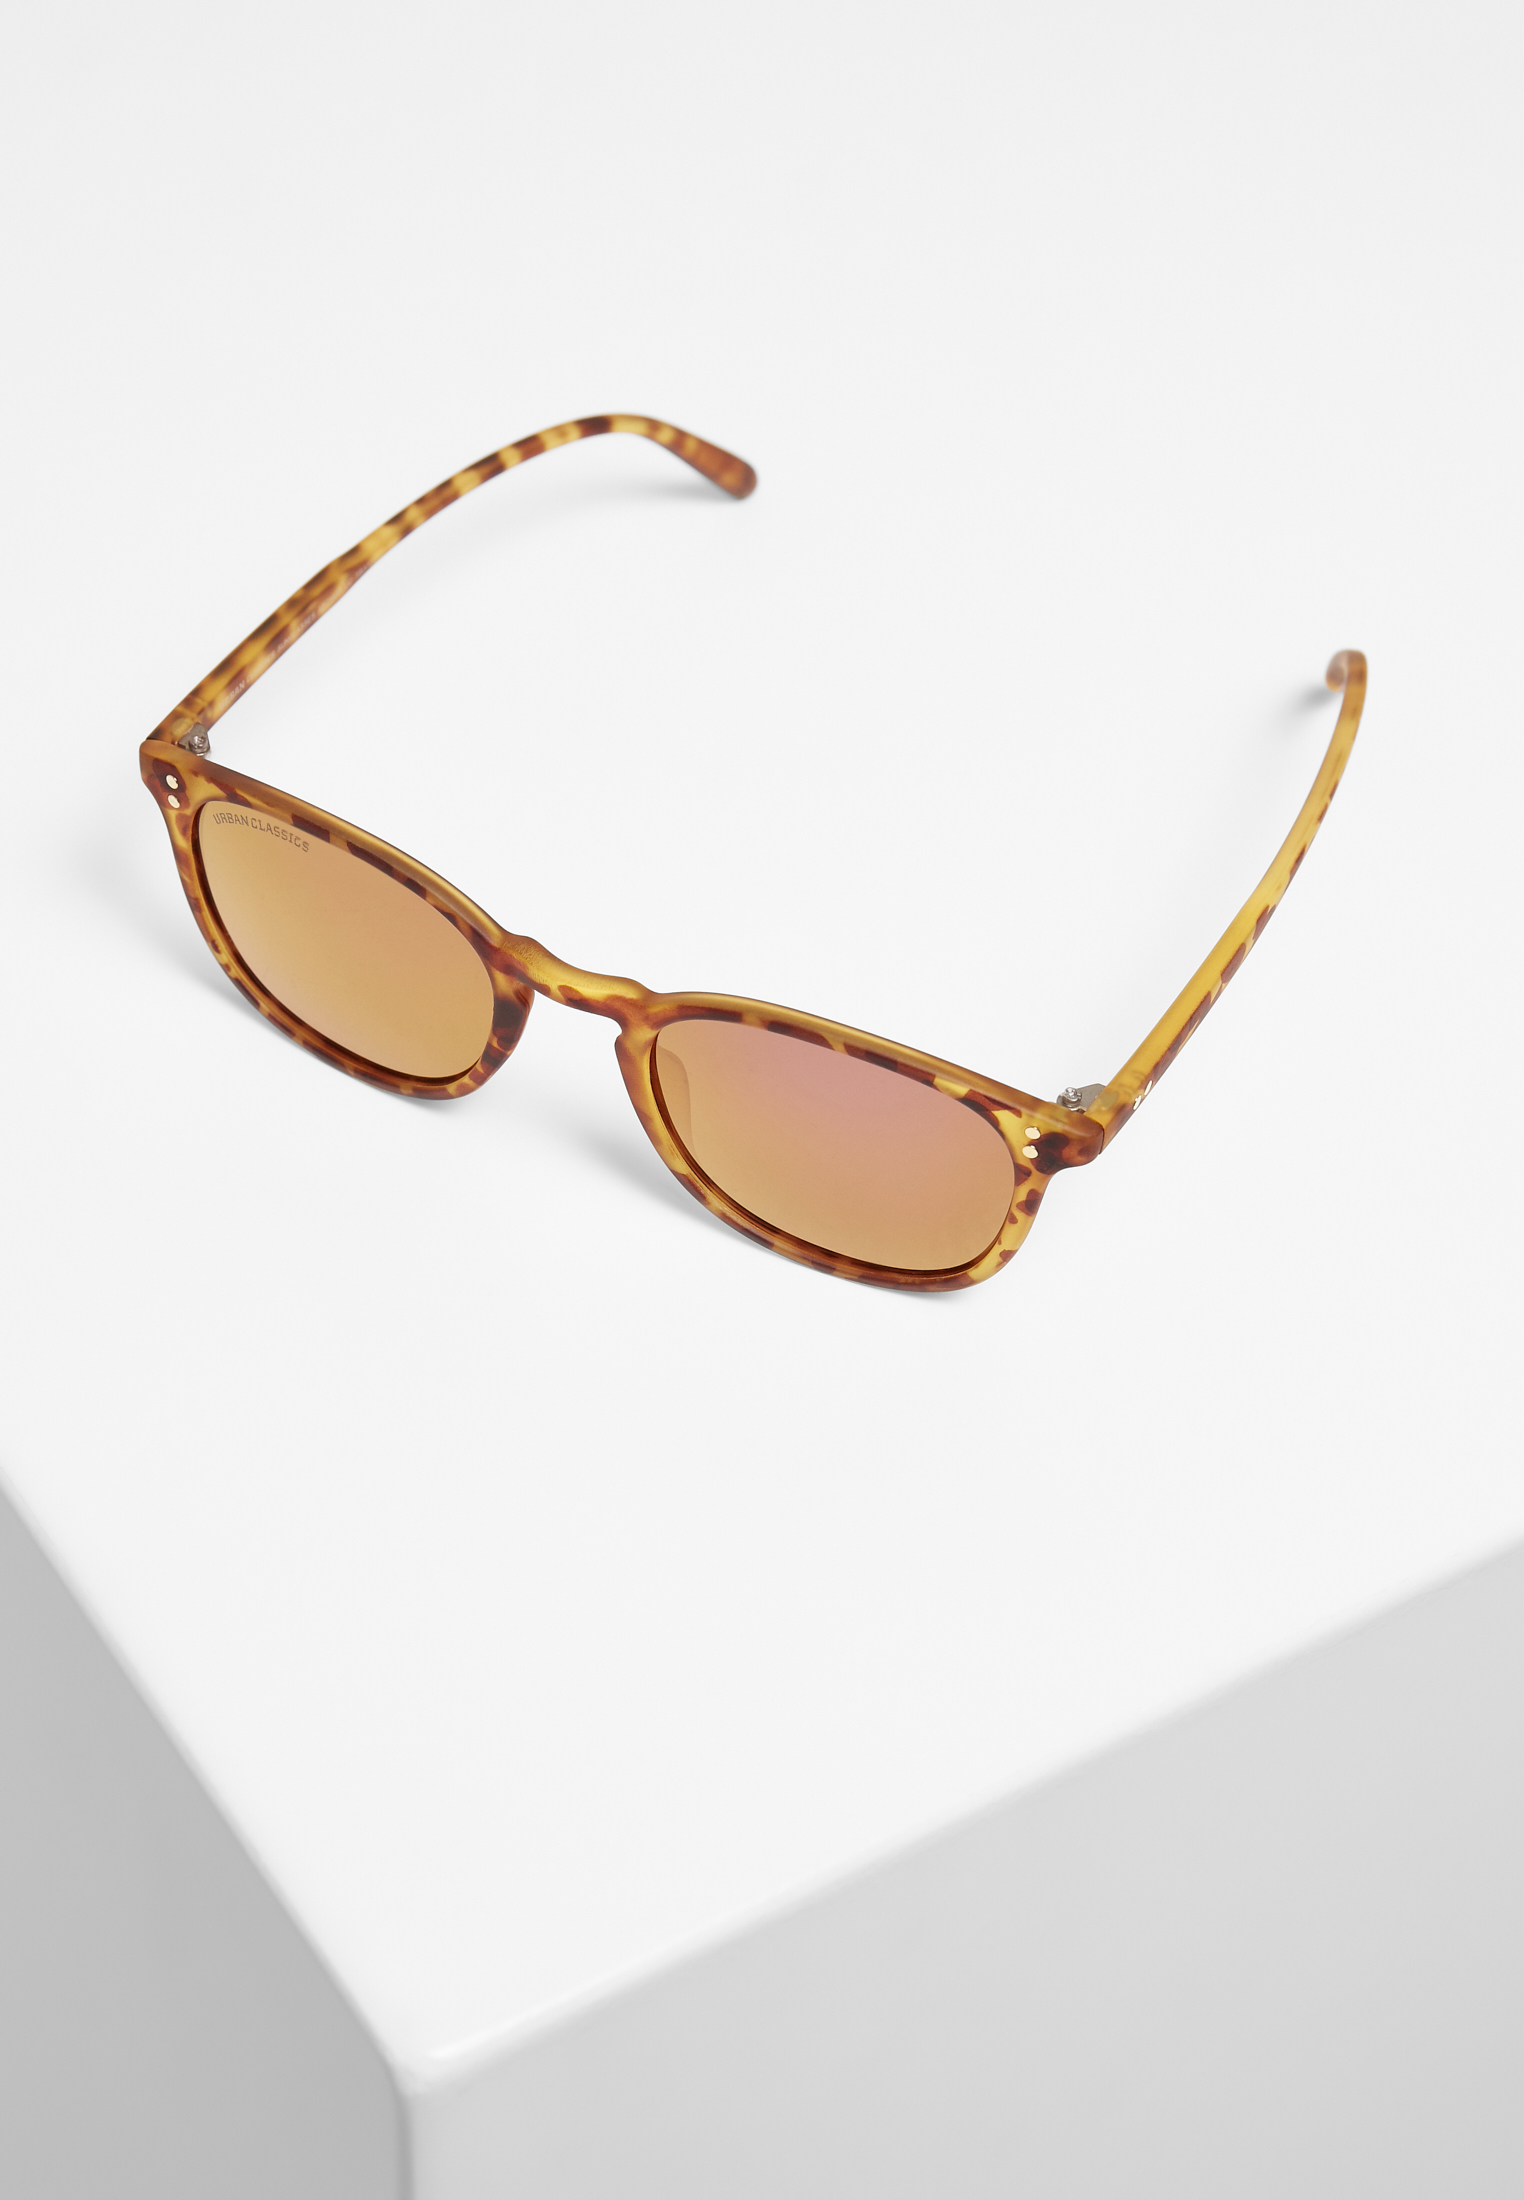 Sonnenbrillen Sunglasses Arthur UC in Farbe brown leo/ros?